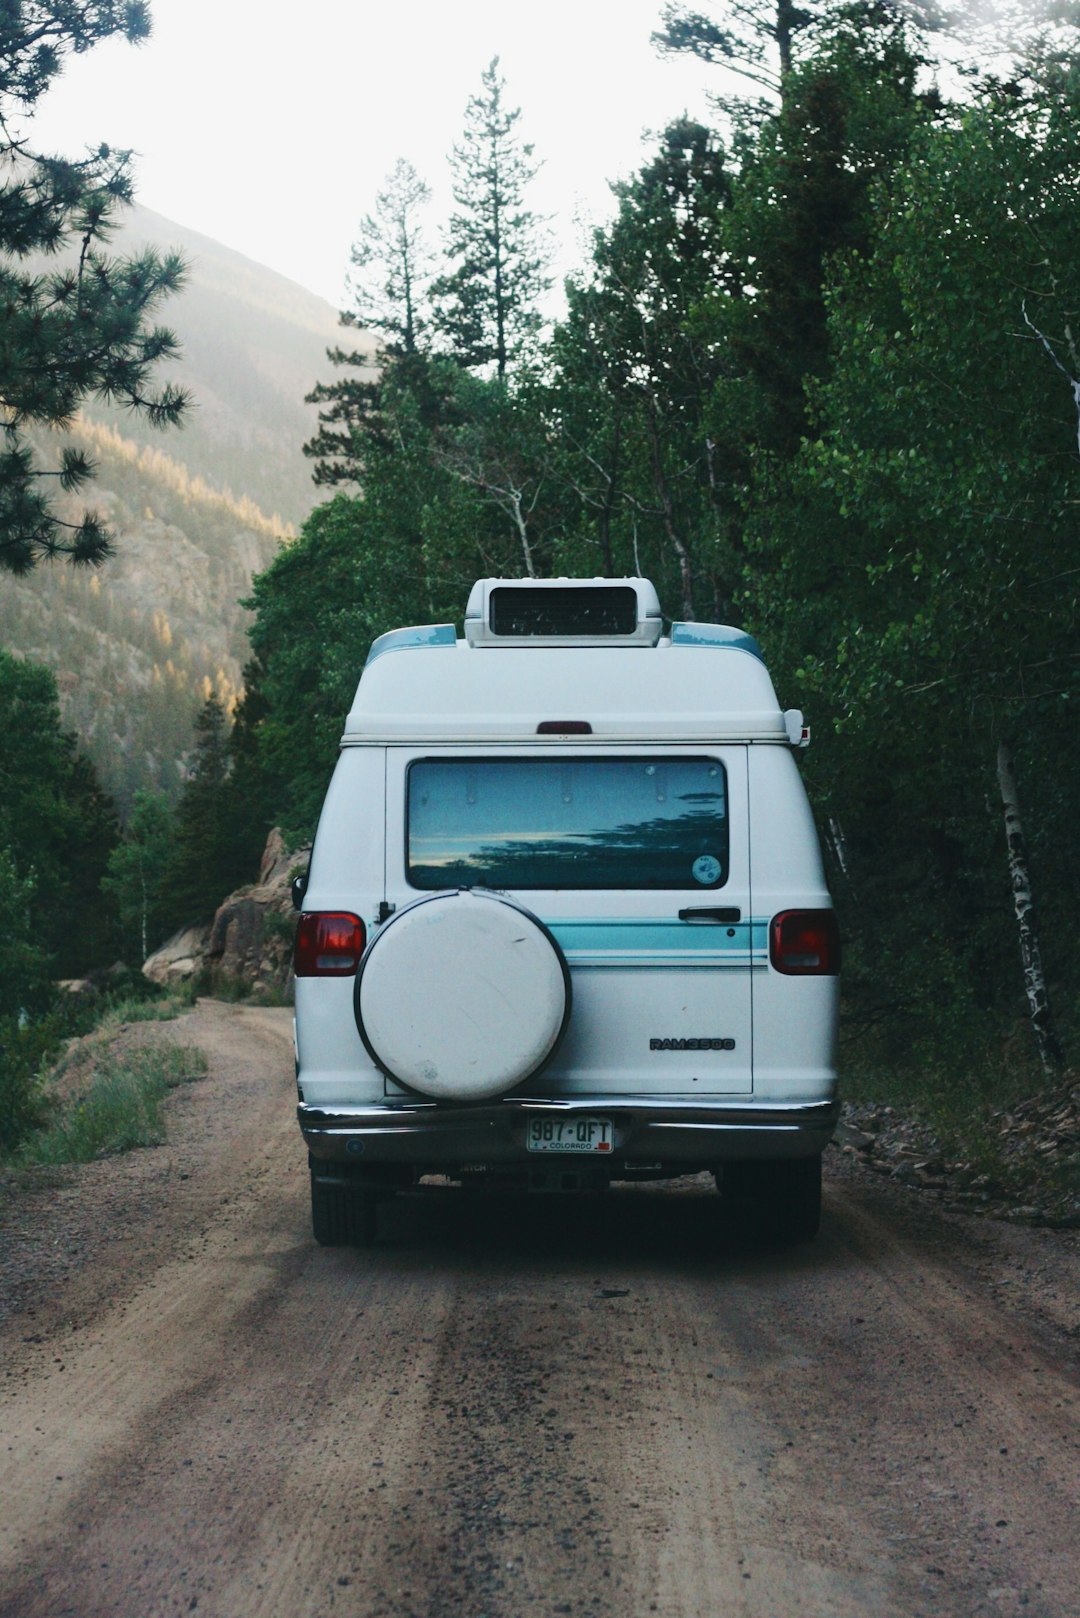 white van on dirt road near green trees during daytime